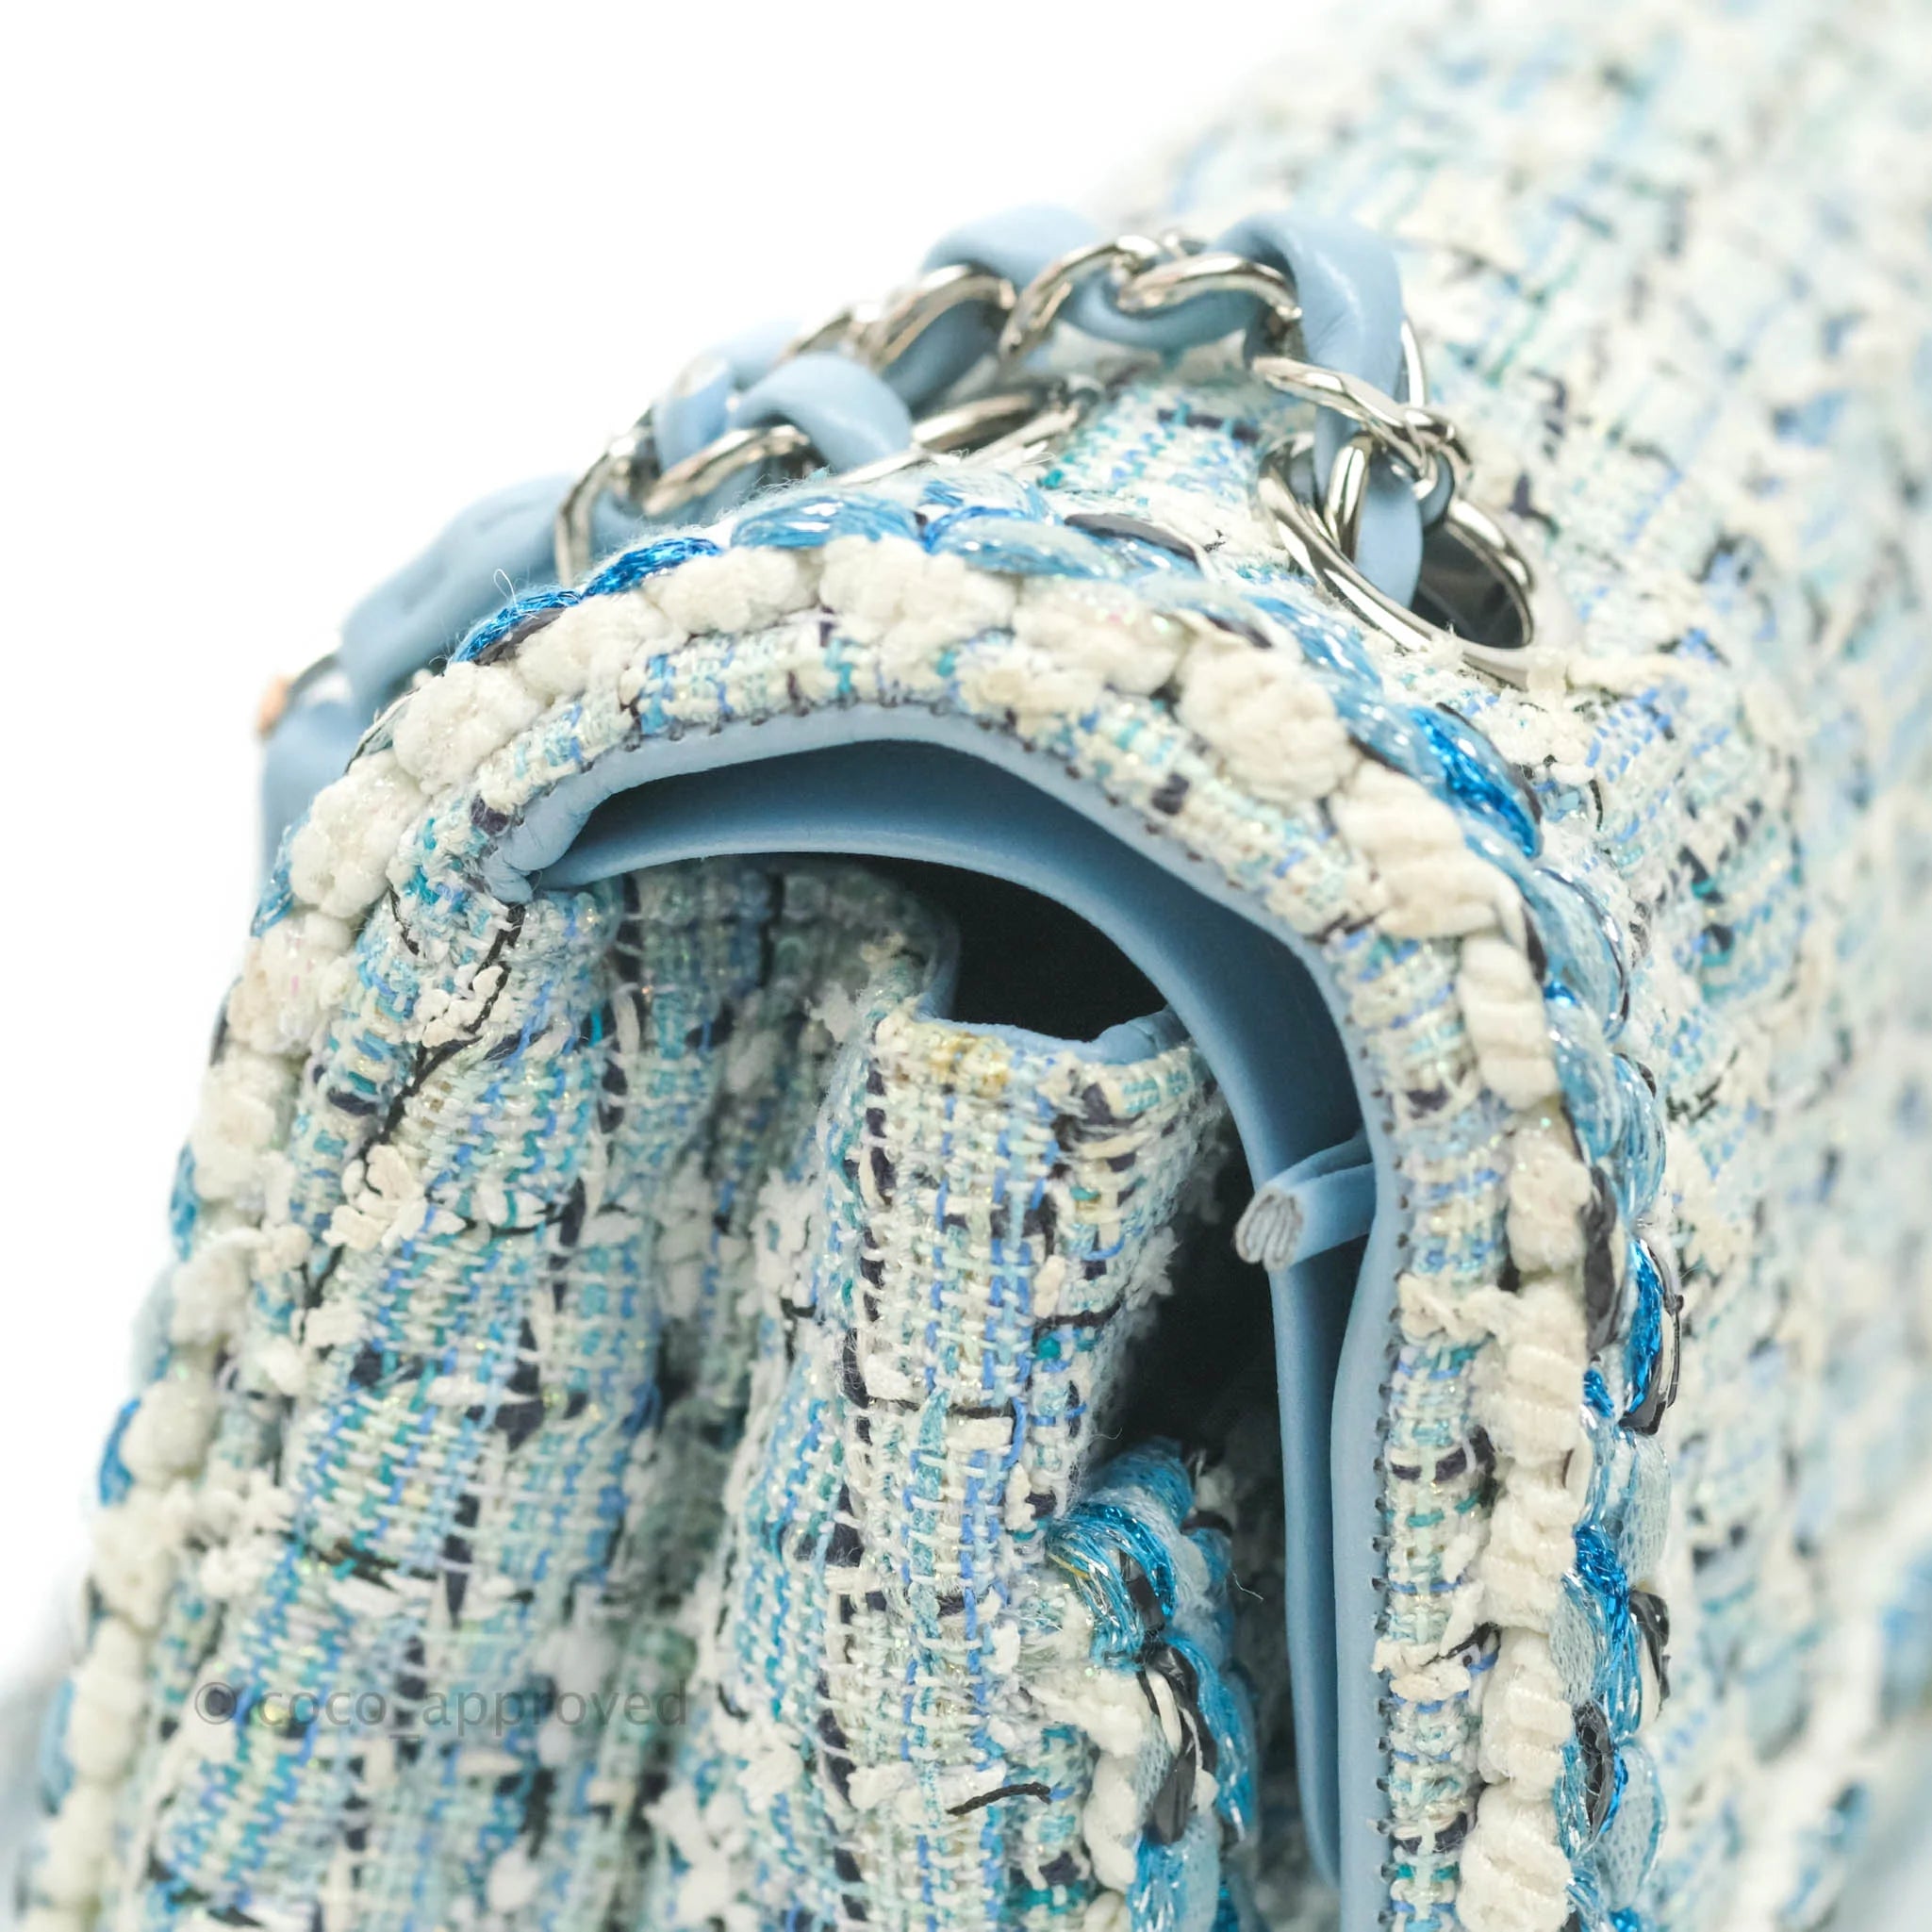 Chanel Blue & Multicolor Quilted Tweed 19 Flap Bag Medium Q6B1T34FM7001